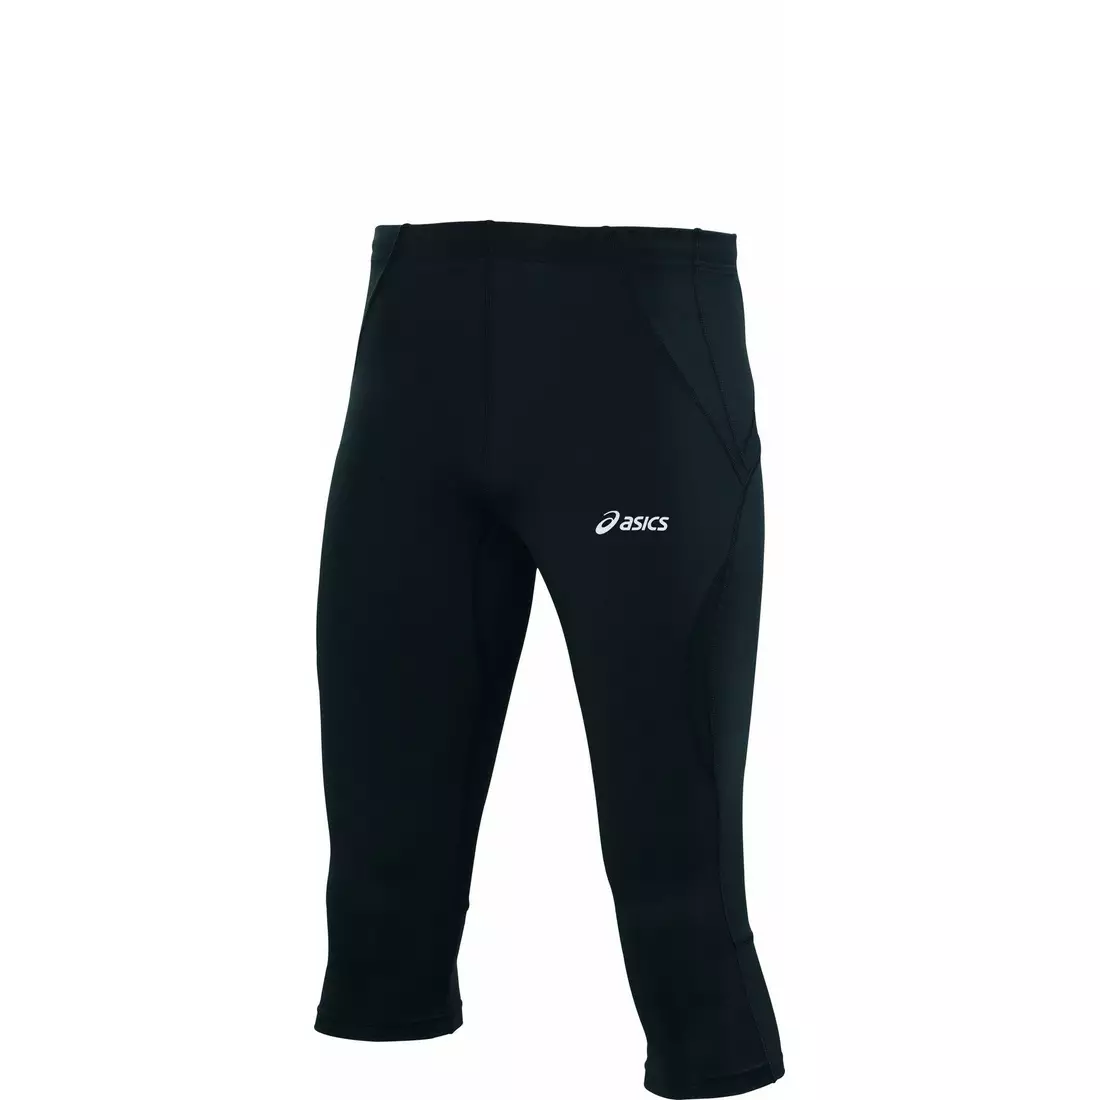 ASICS 321248-0900 - men's 3/4 running shorts, uninsulated